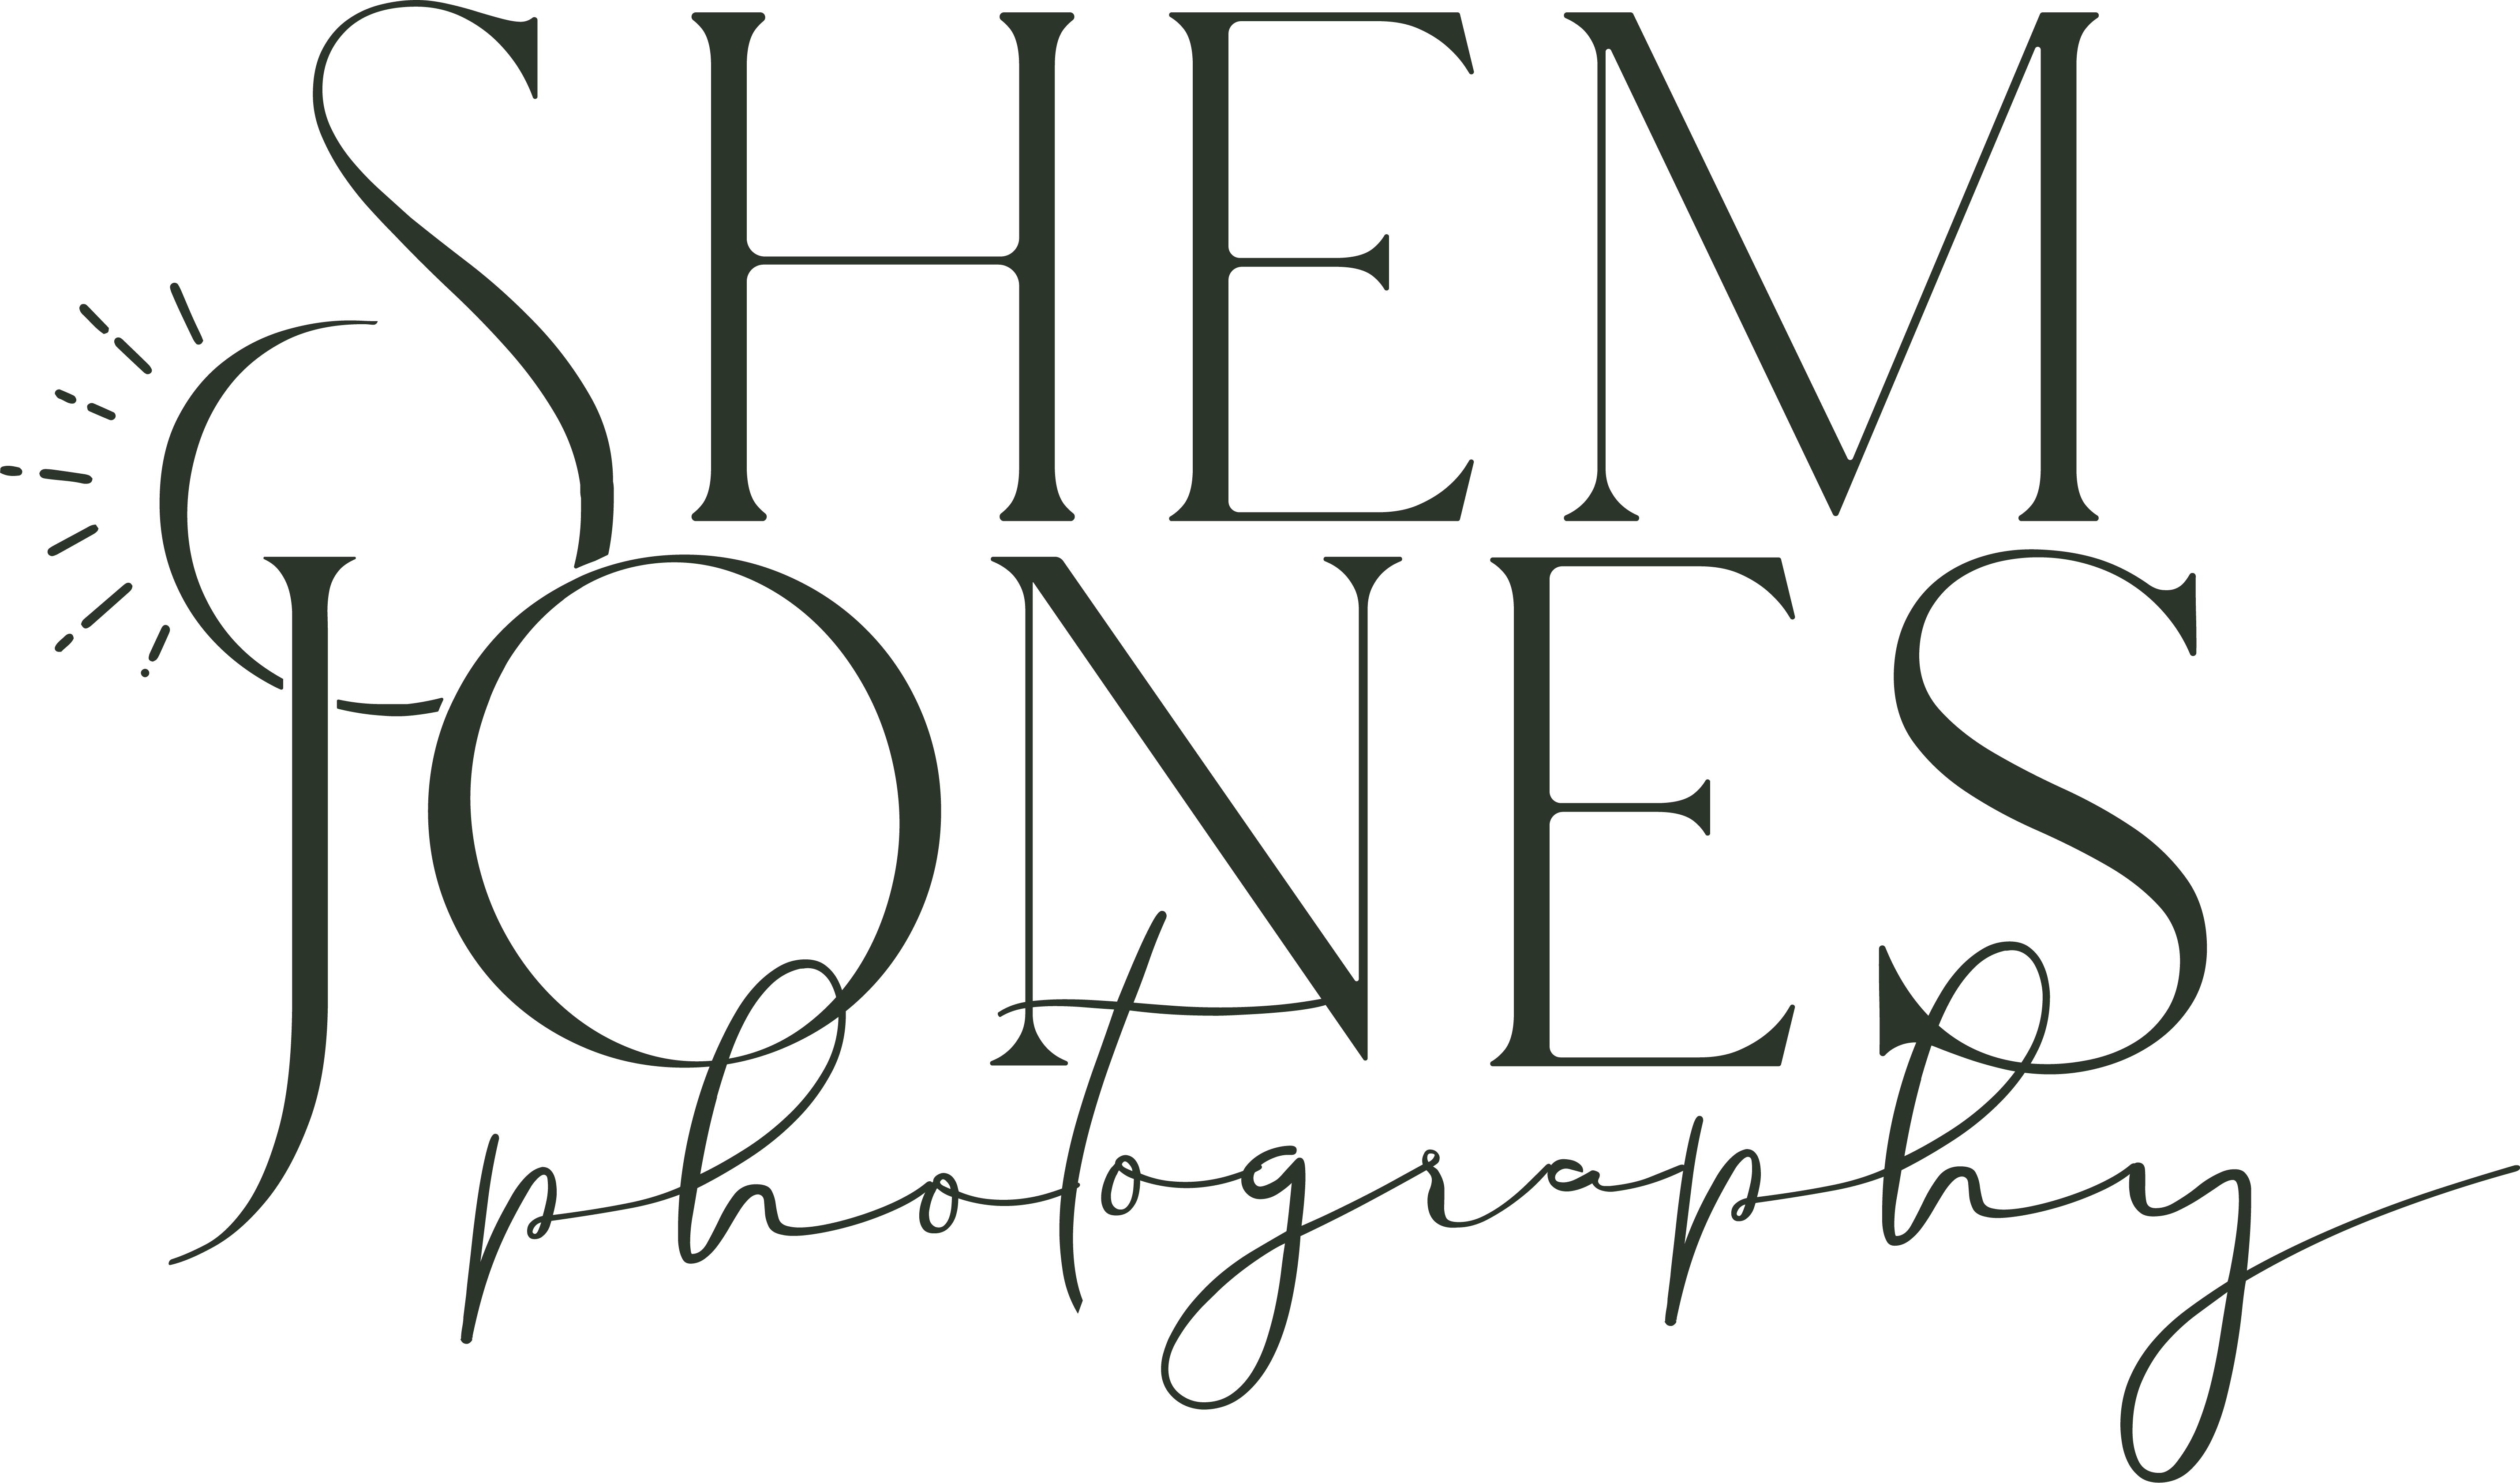 Shem Jones Photography